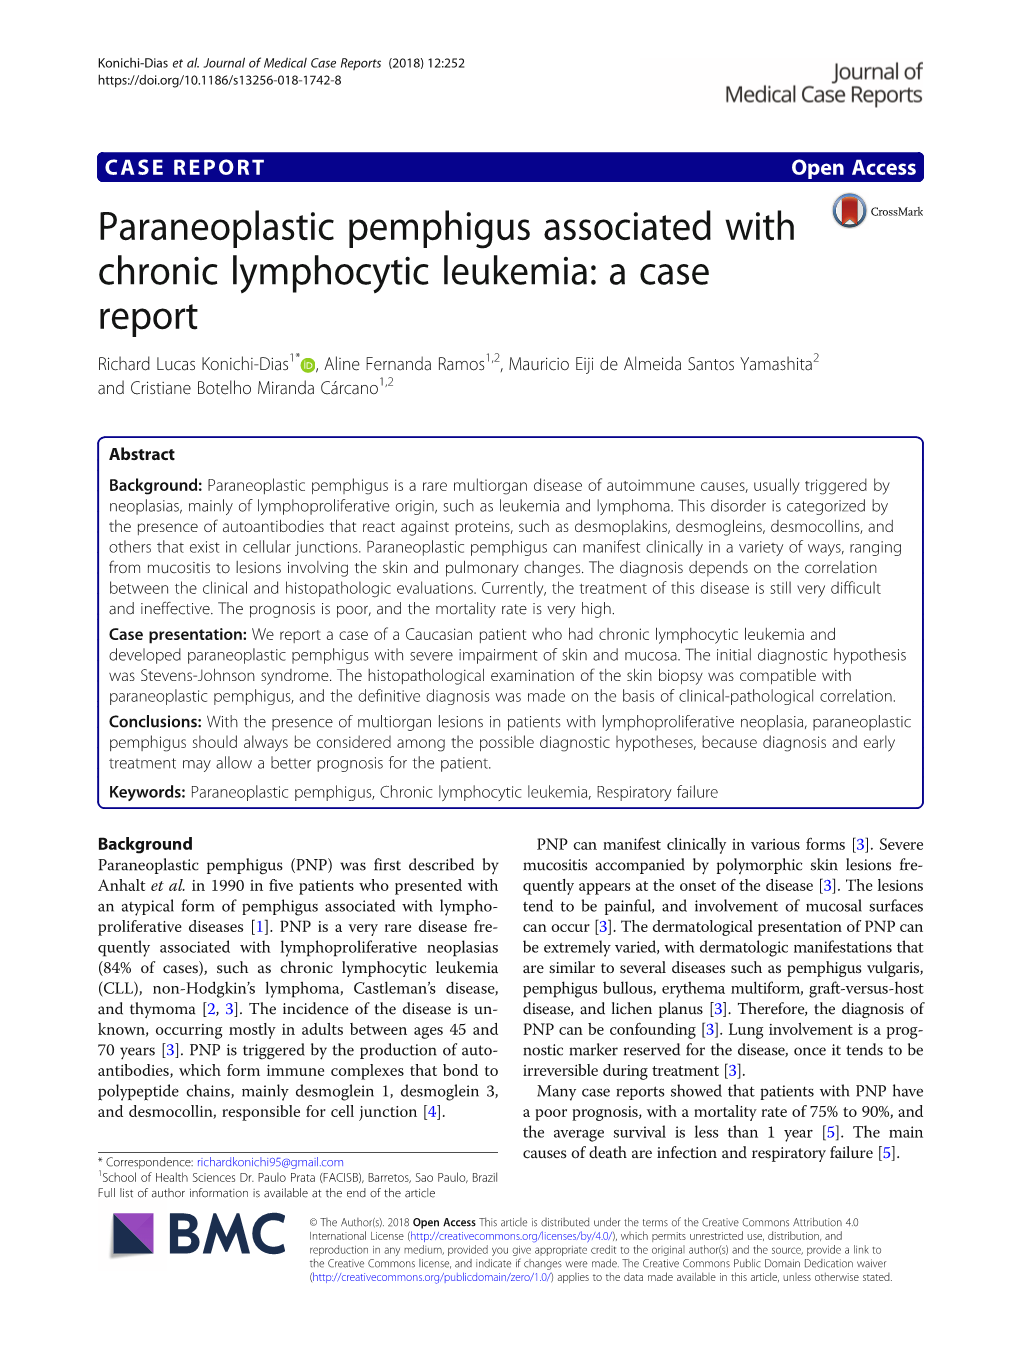 Paraneoplastic Pemphigus Associated with Chronic Lymphocytic Leukemia